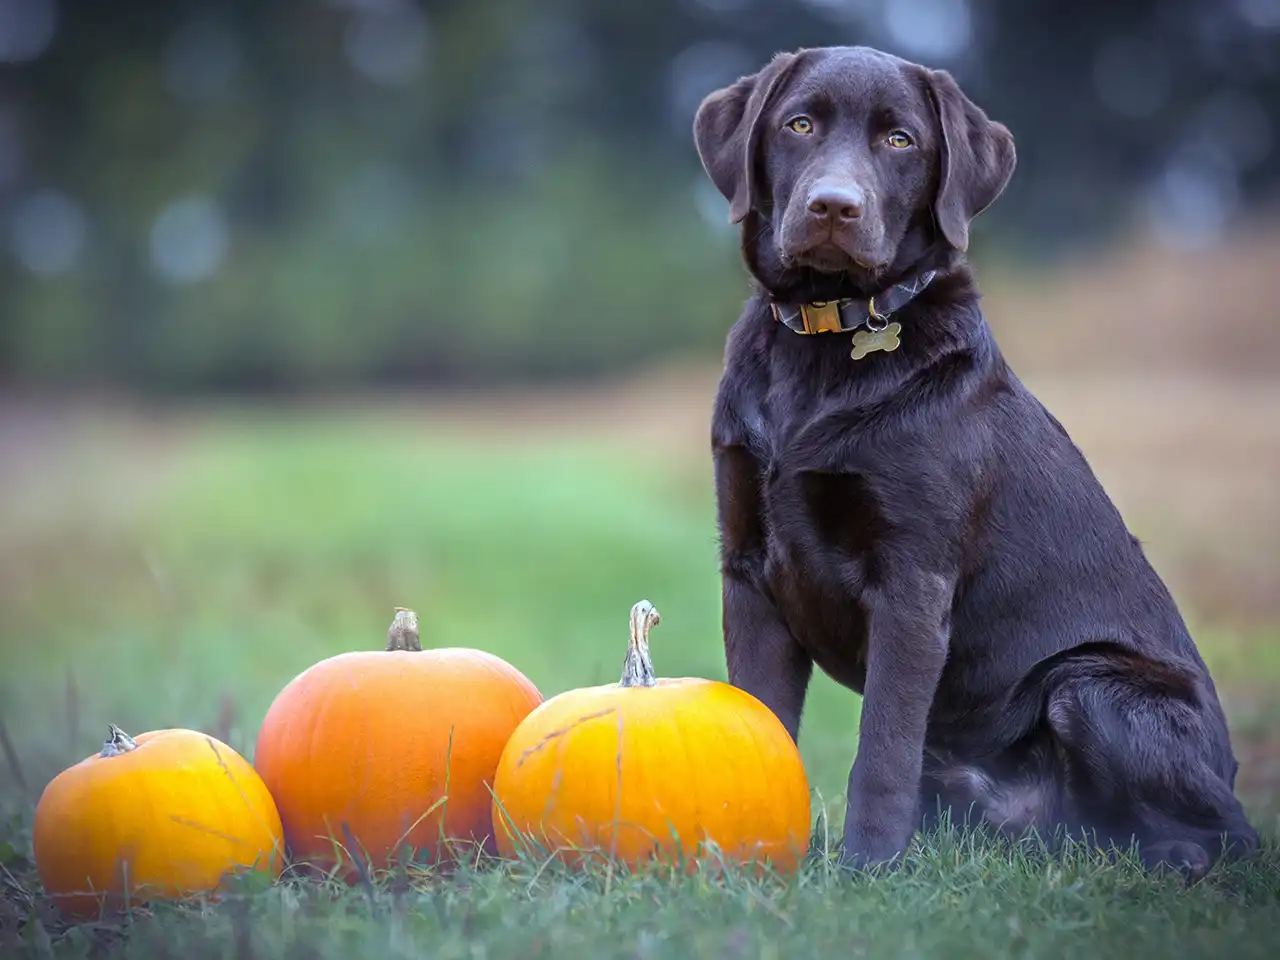 Black dog sitting on grass along with three orange pumpkins